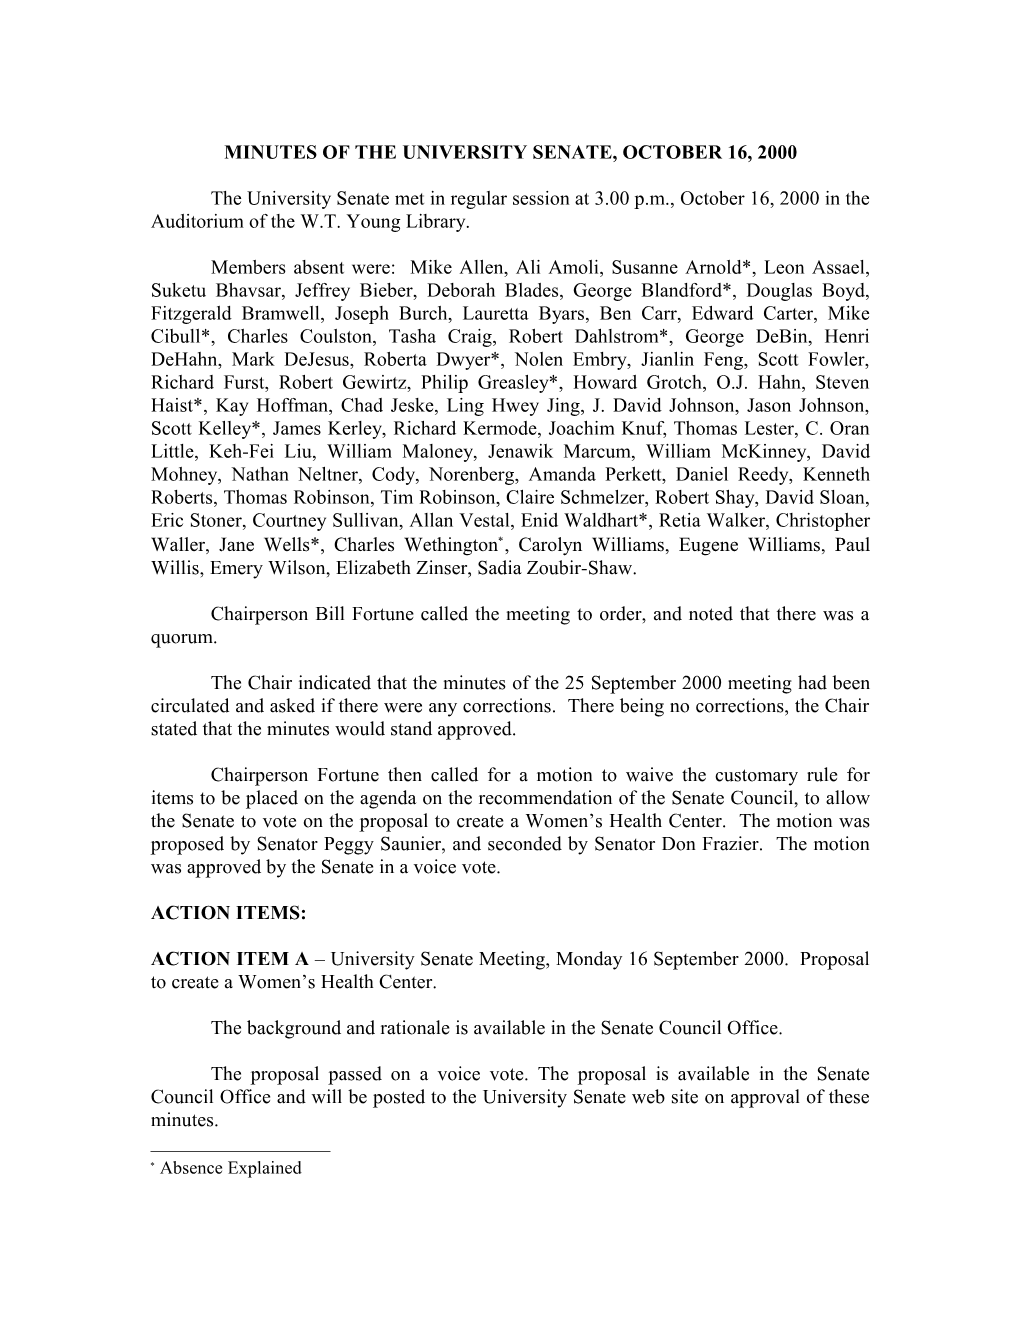 Minutes of the University Senate, September 11, 2000